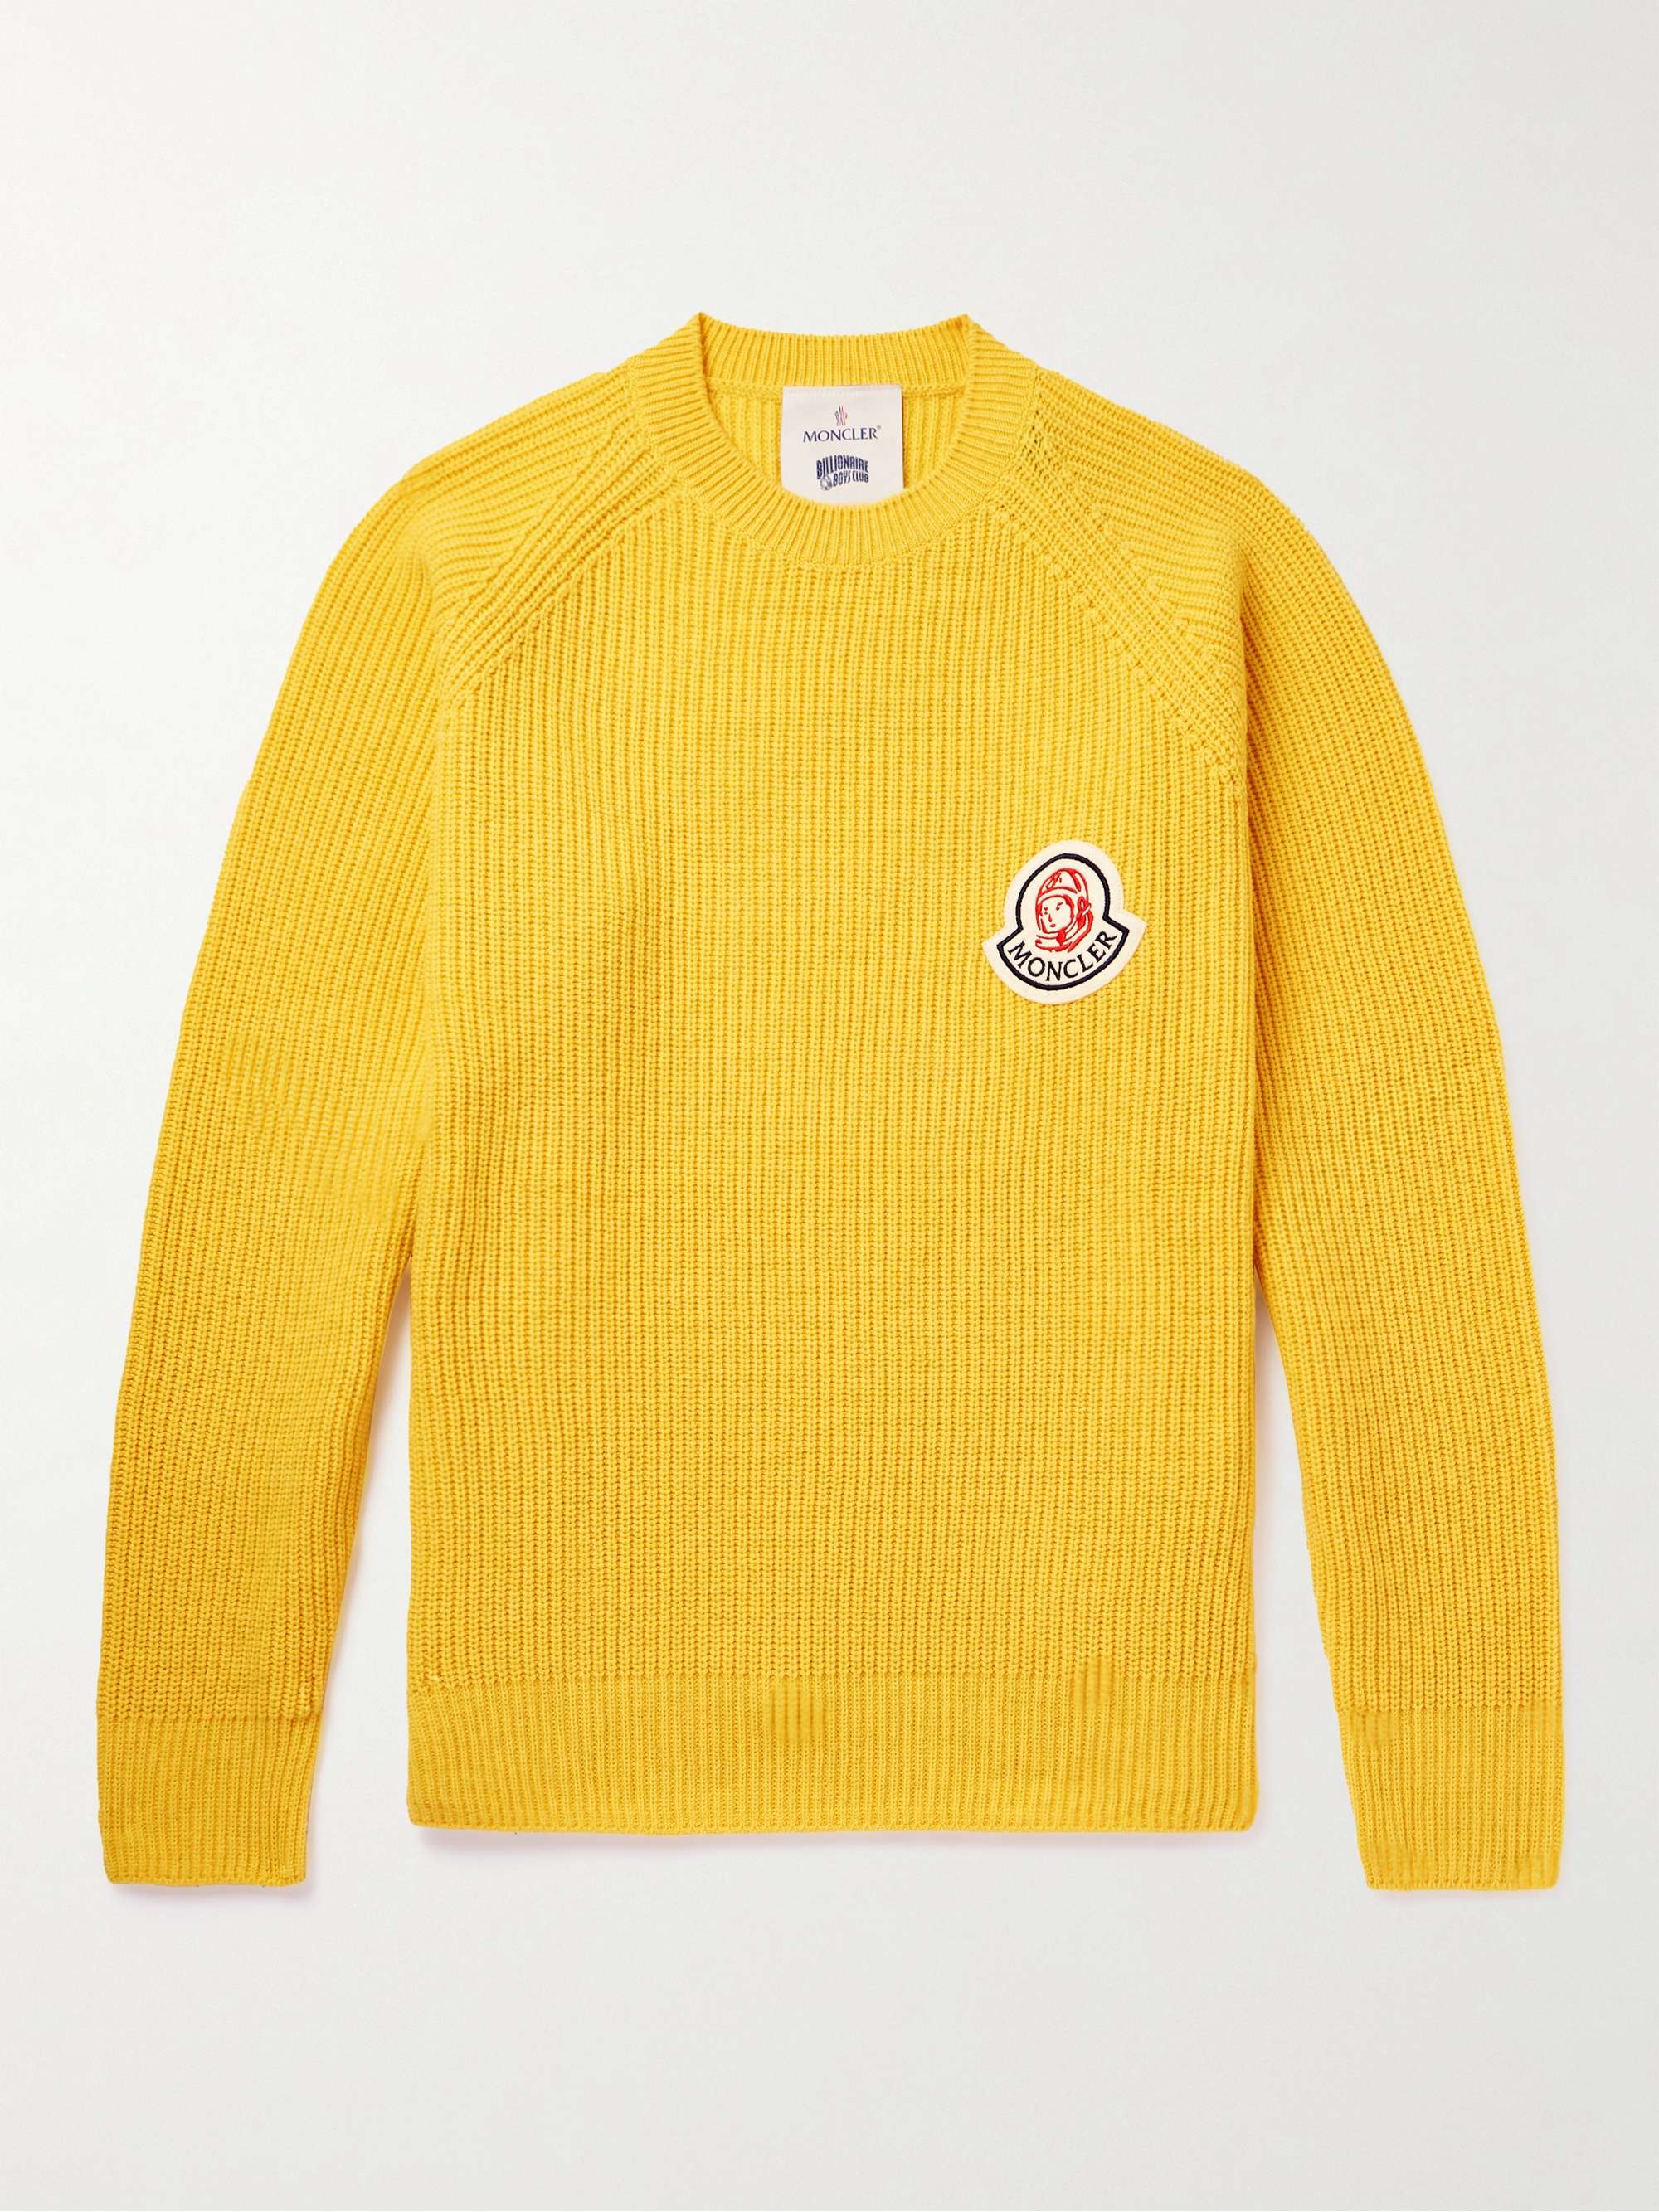 Louis Vuitton Men's Wool Cashmere Yellow Gray Color Block Sweater